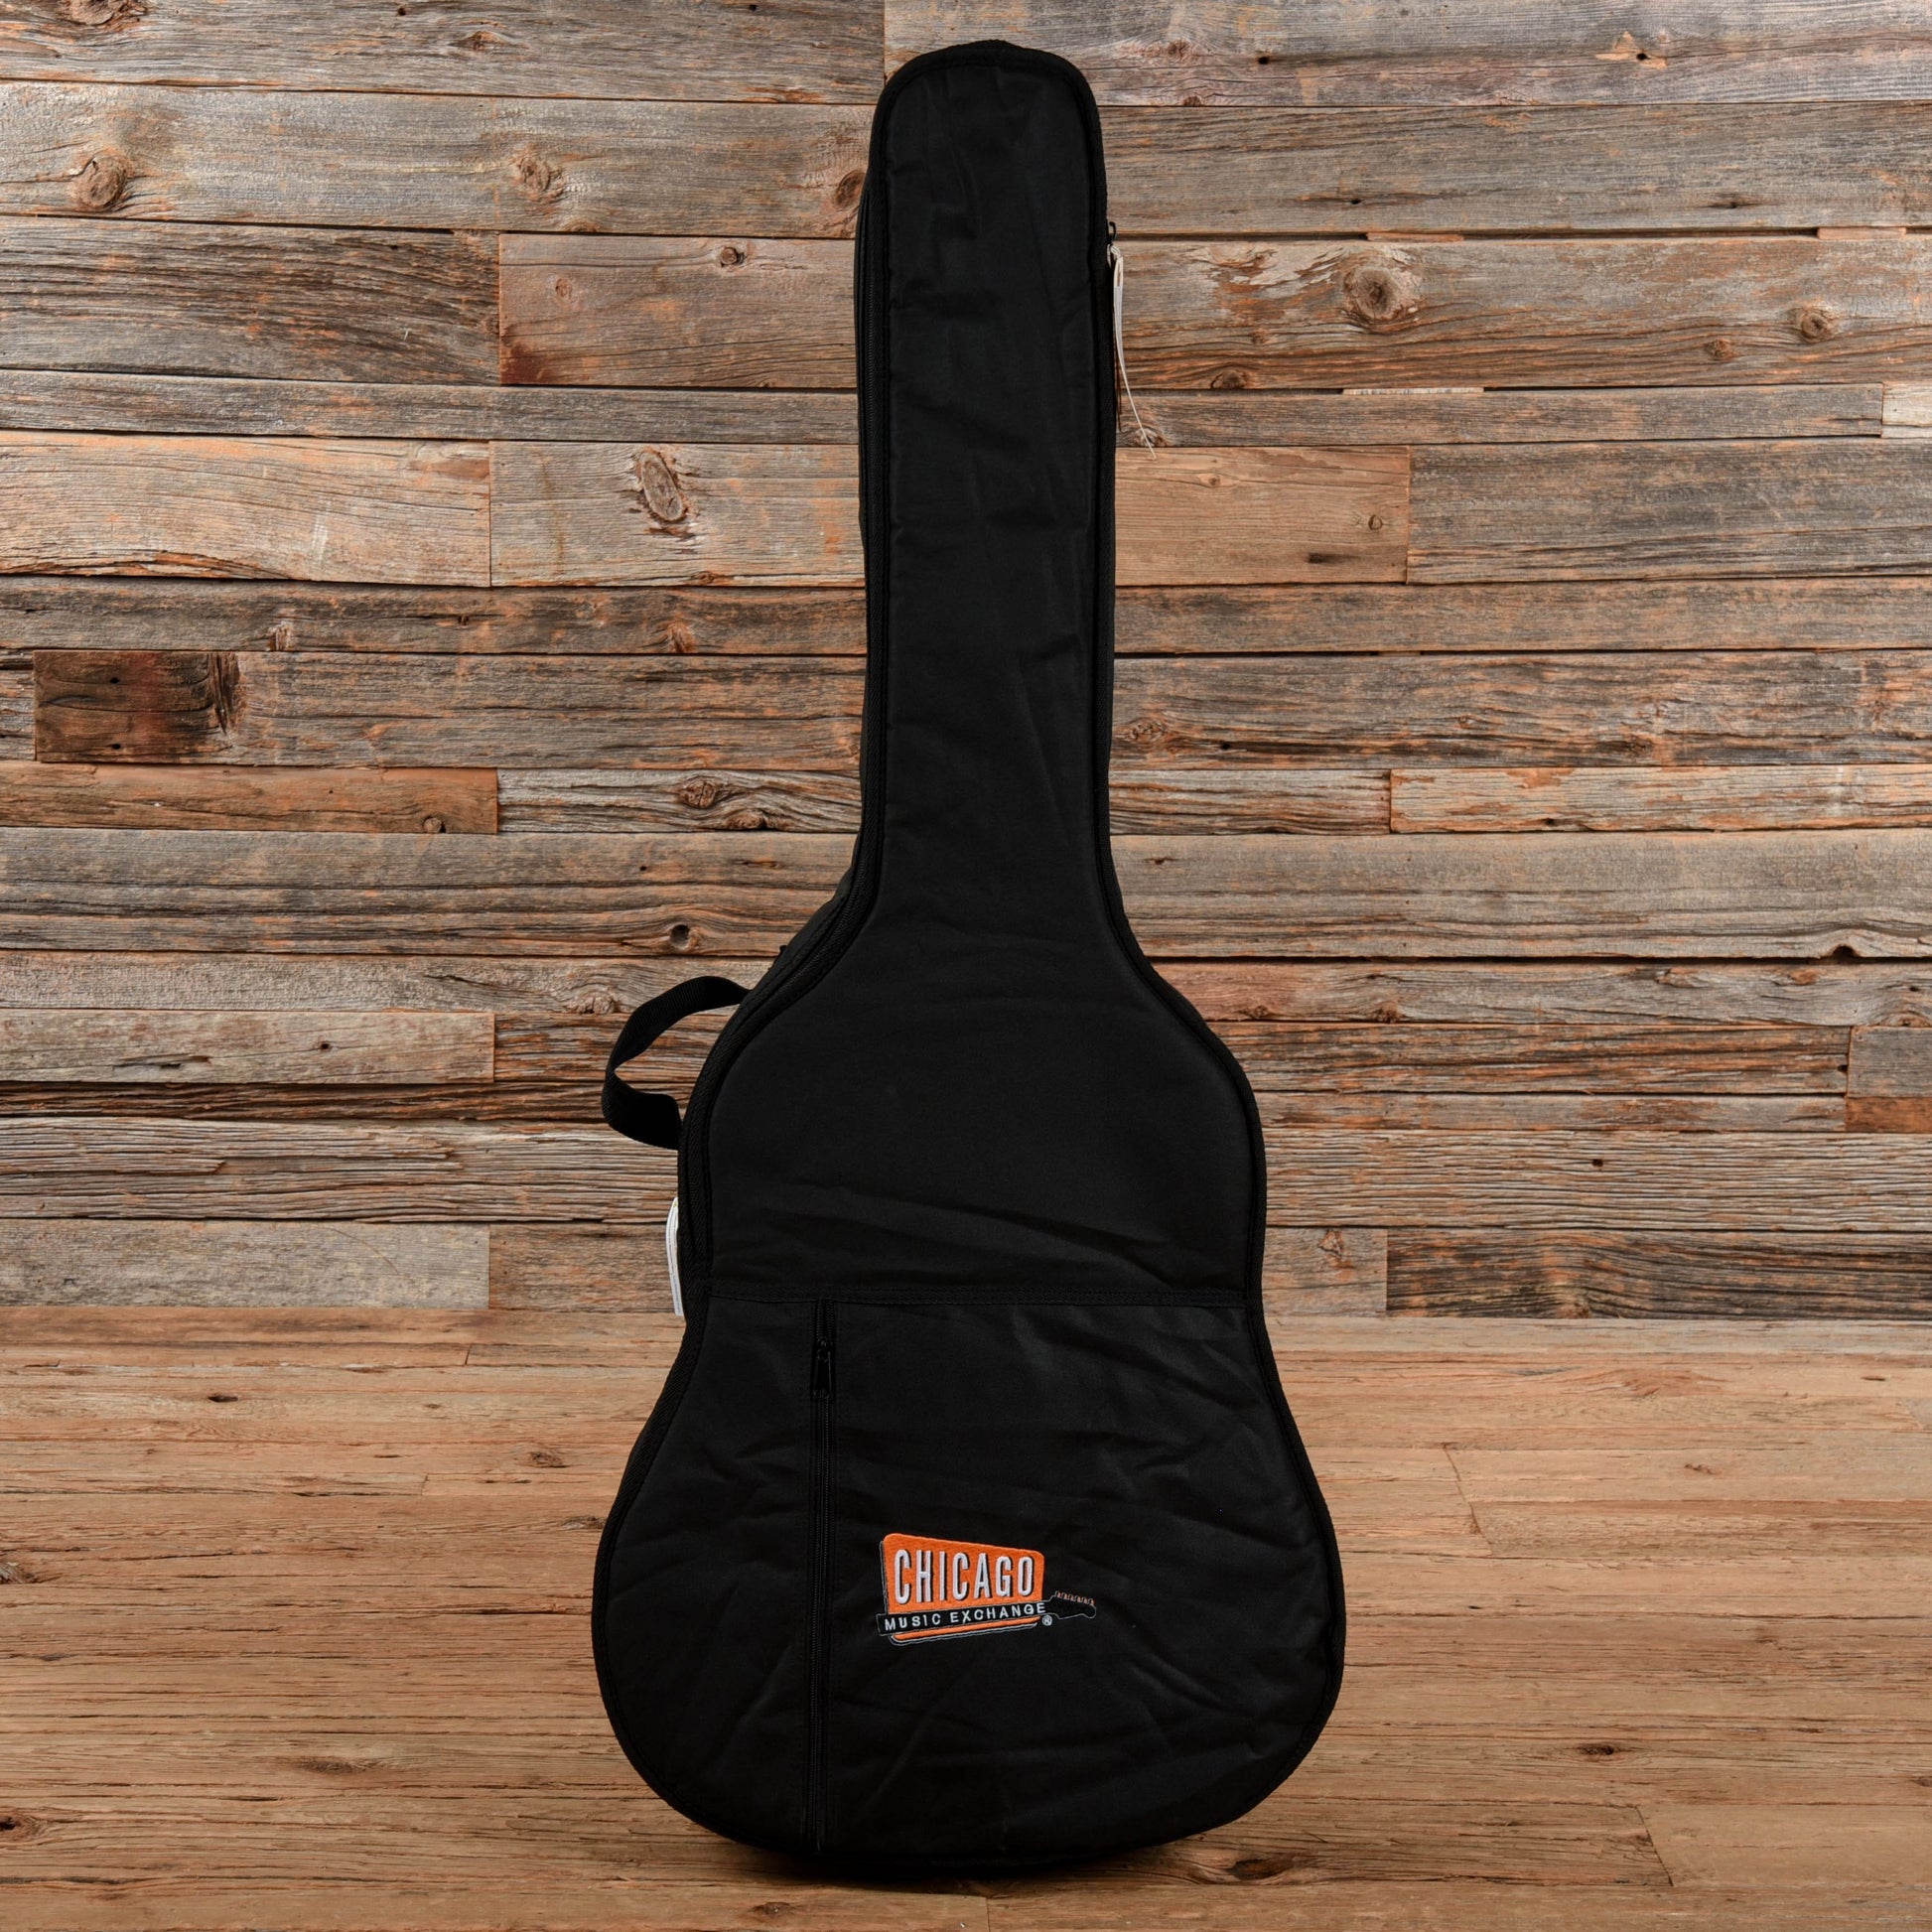 Breedlove Studio C250 Natural Acoustic Guitars / Concert